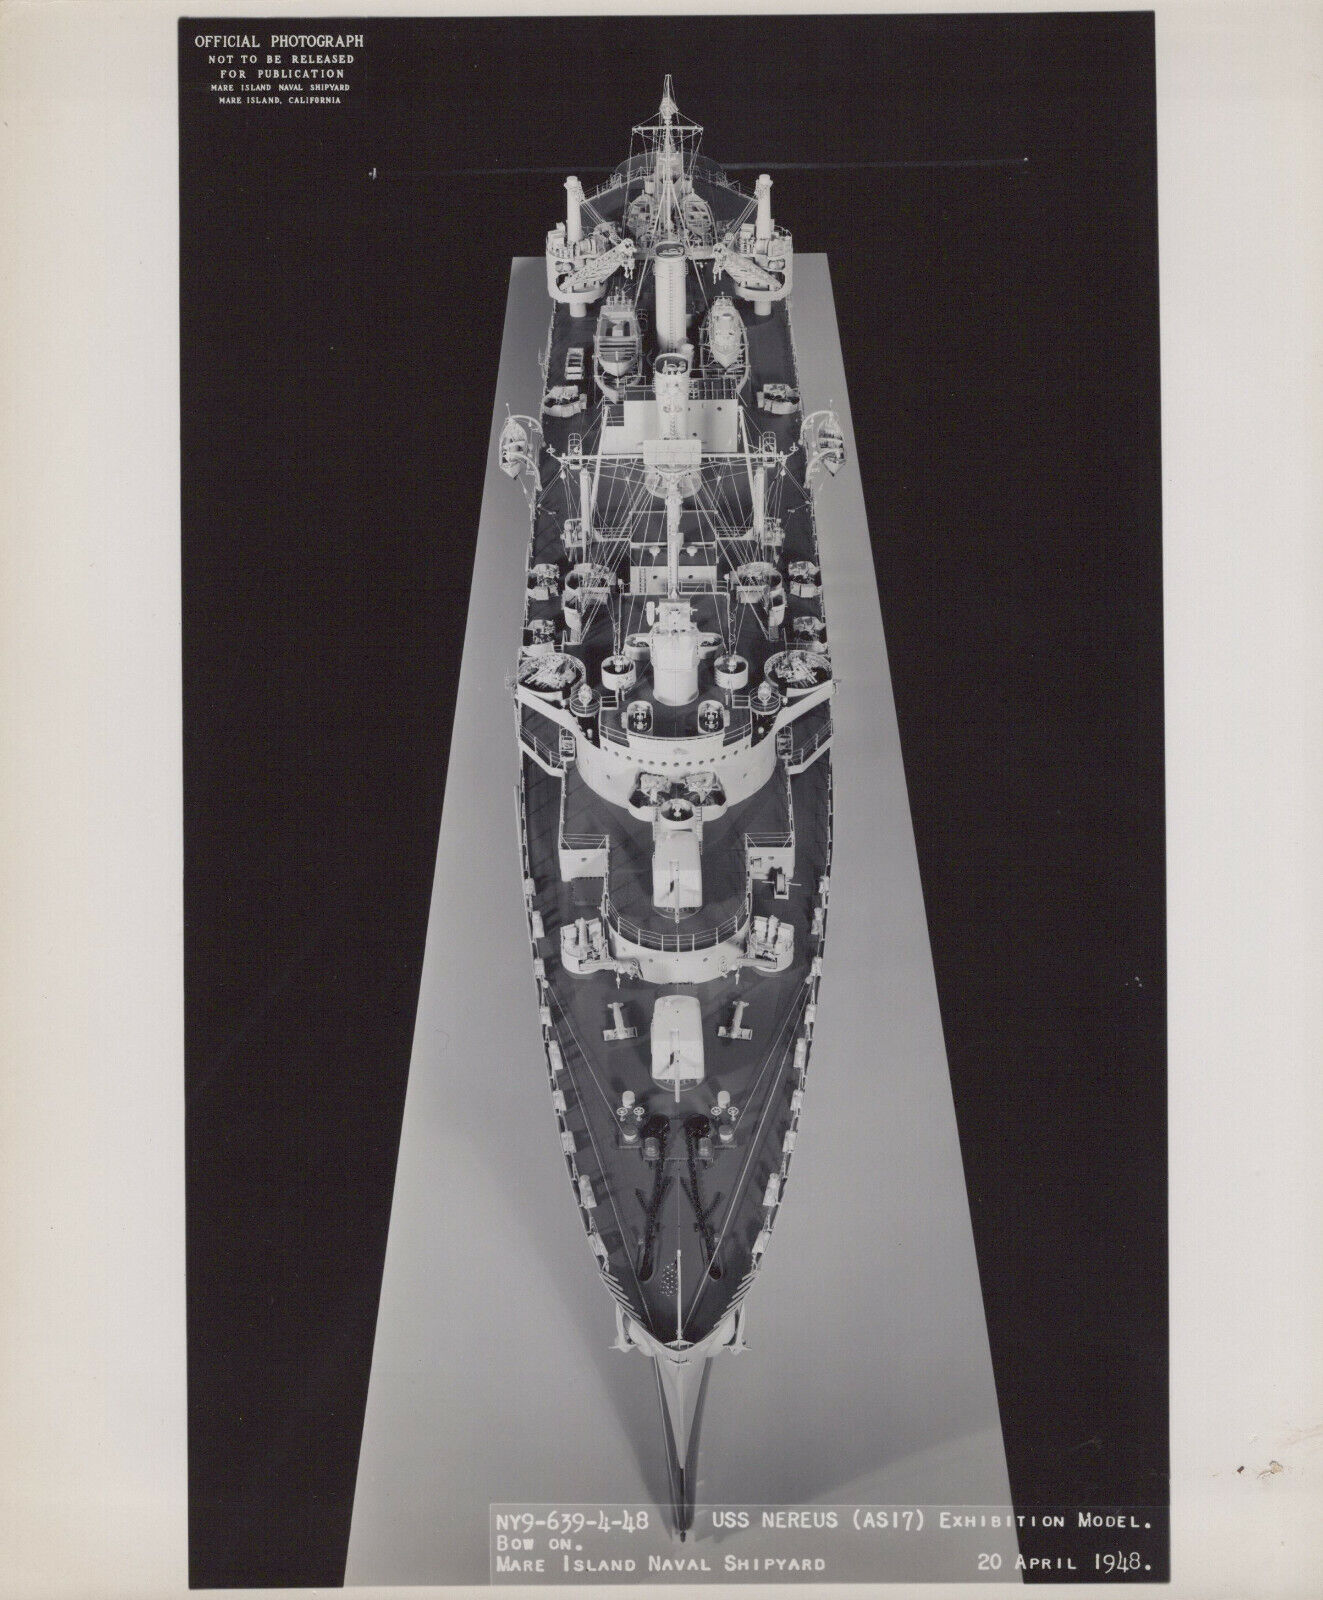 Mare Island Naval Shipyard USS NEREUS AS-17 Exhibition Model BOW ON 1948 Photo